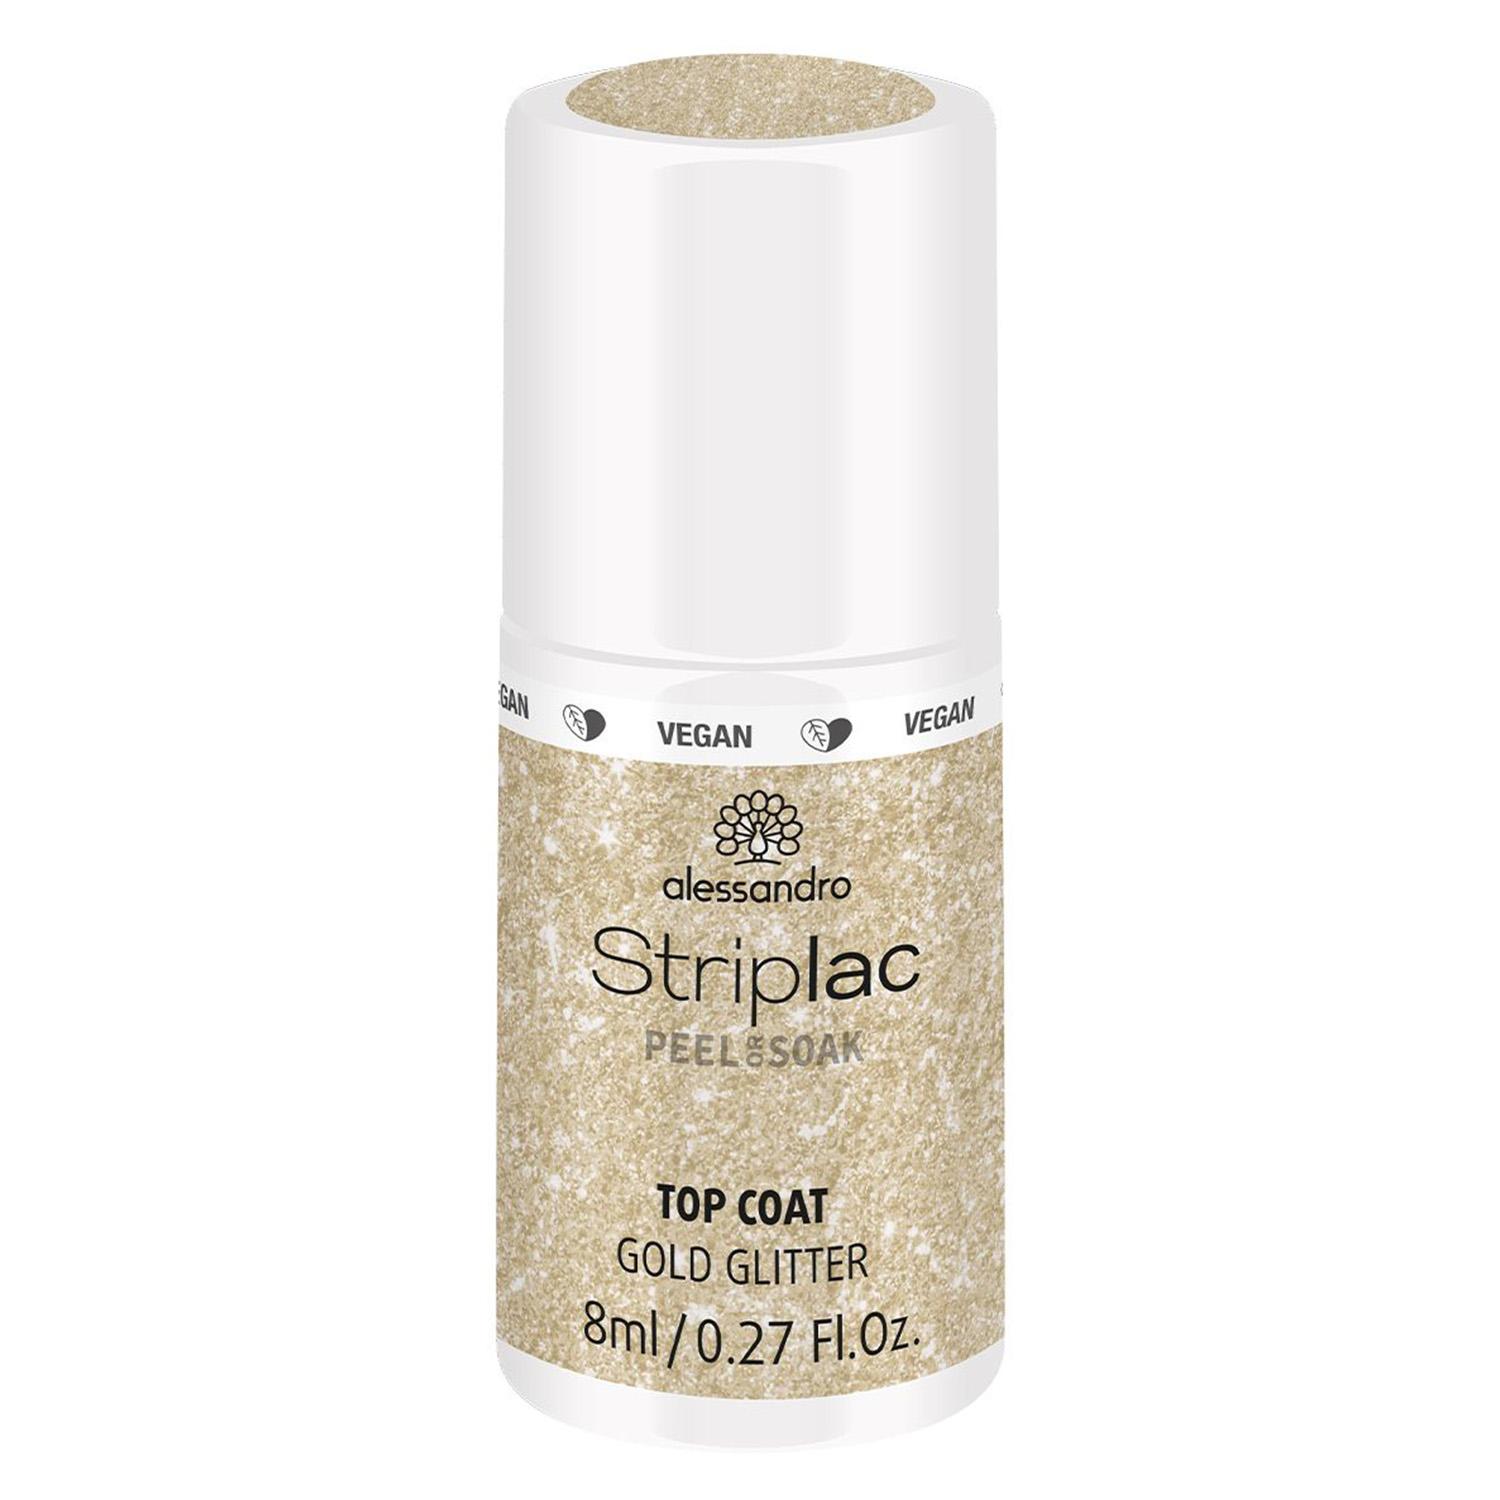 Striplac Peel or Soak - Top Coat Gold Glitter